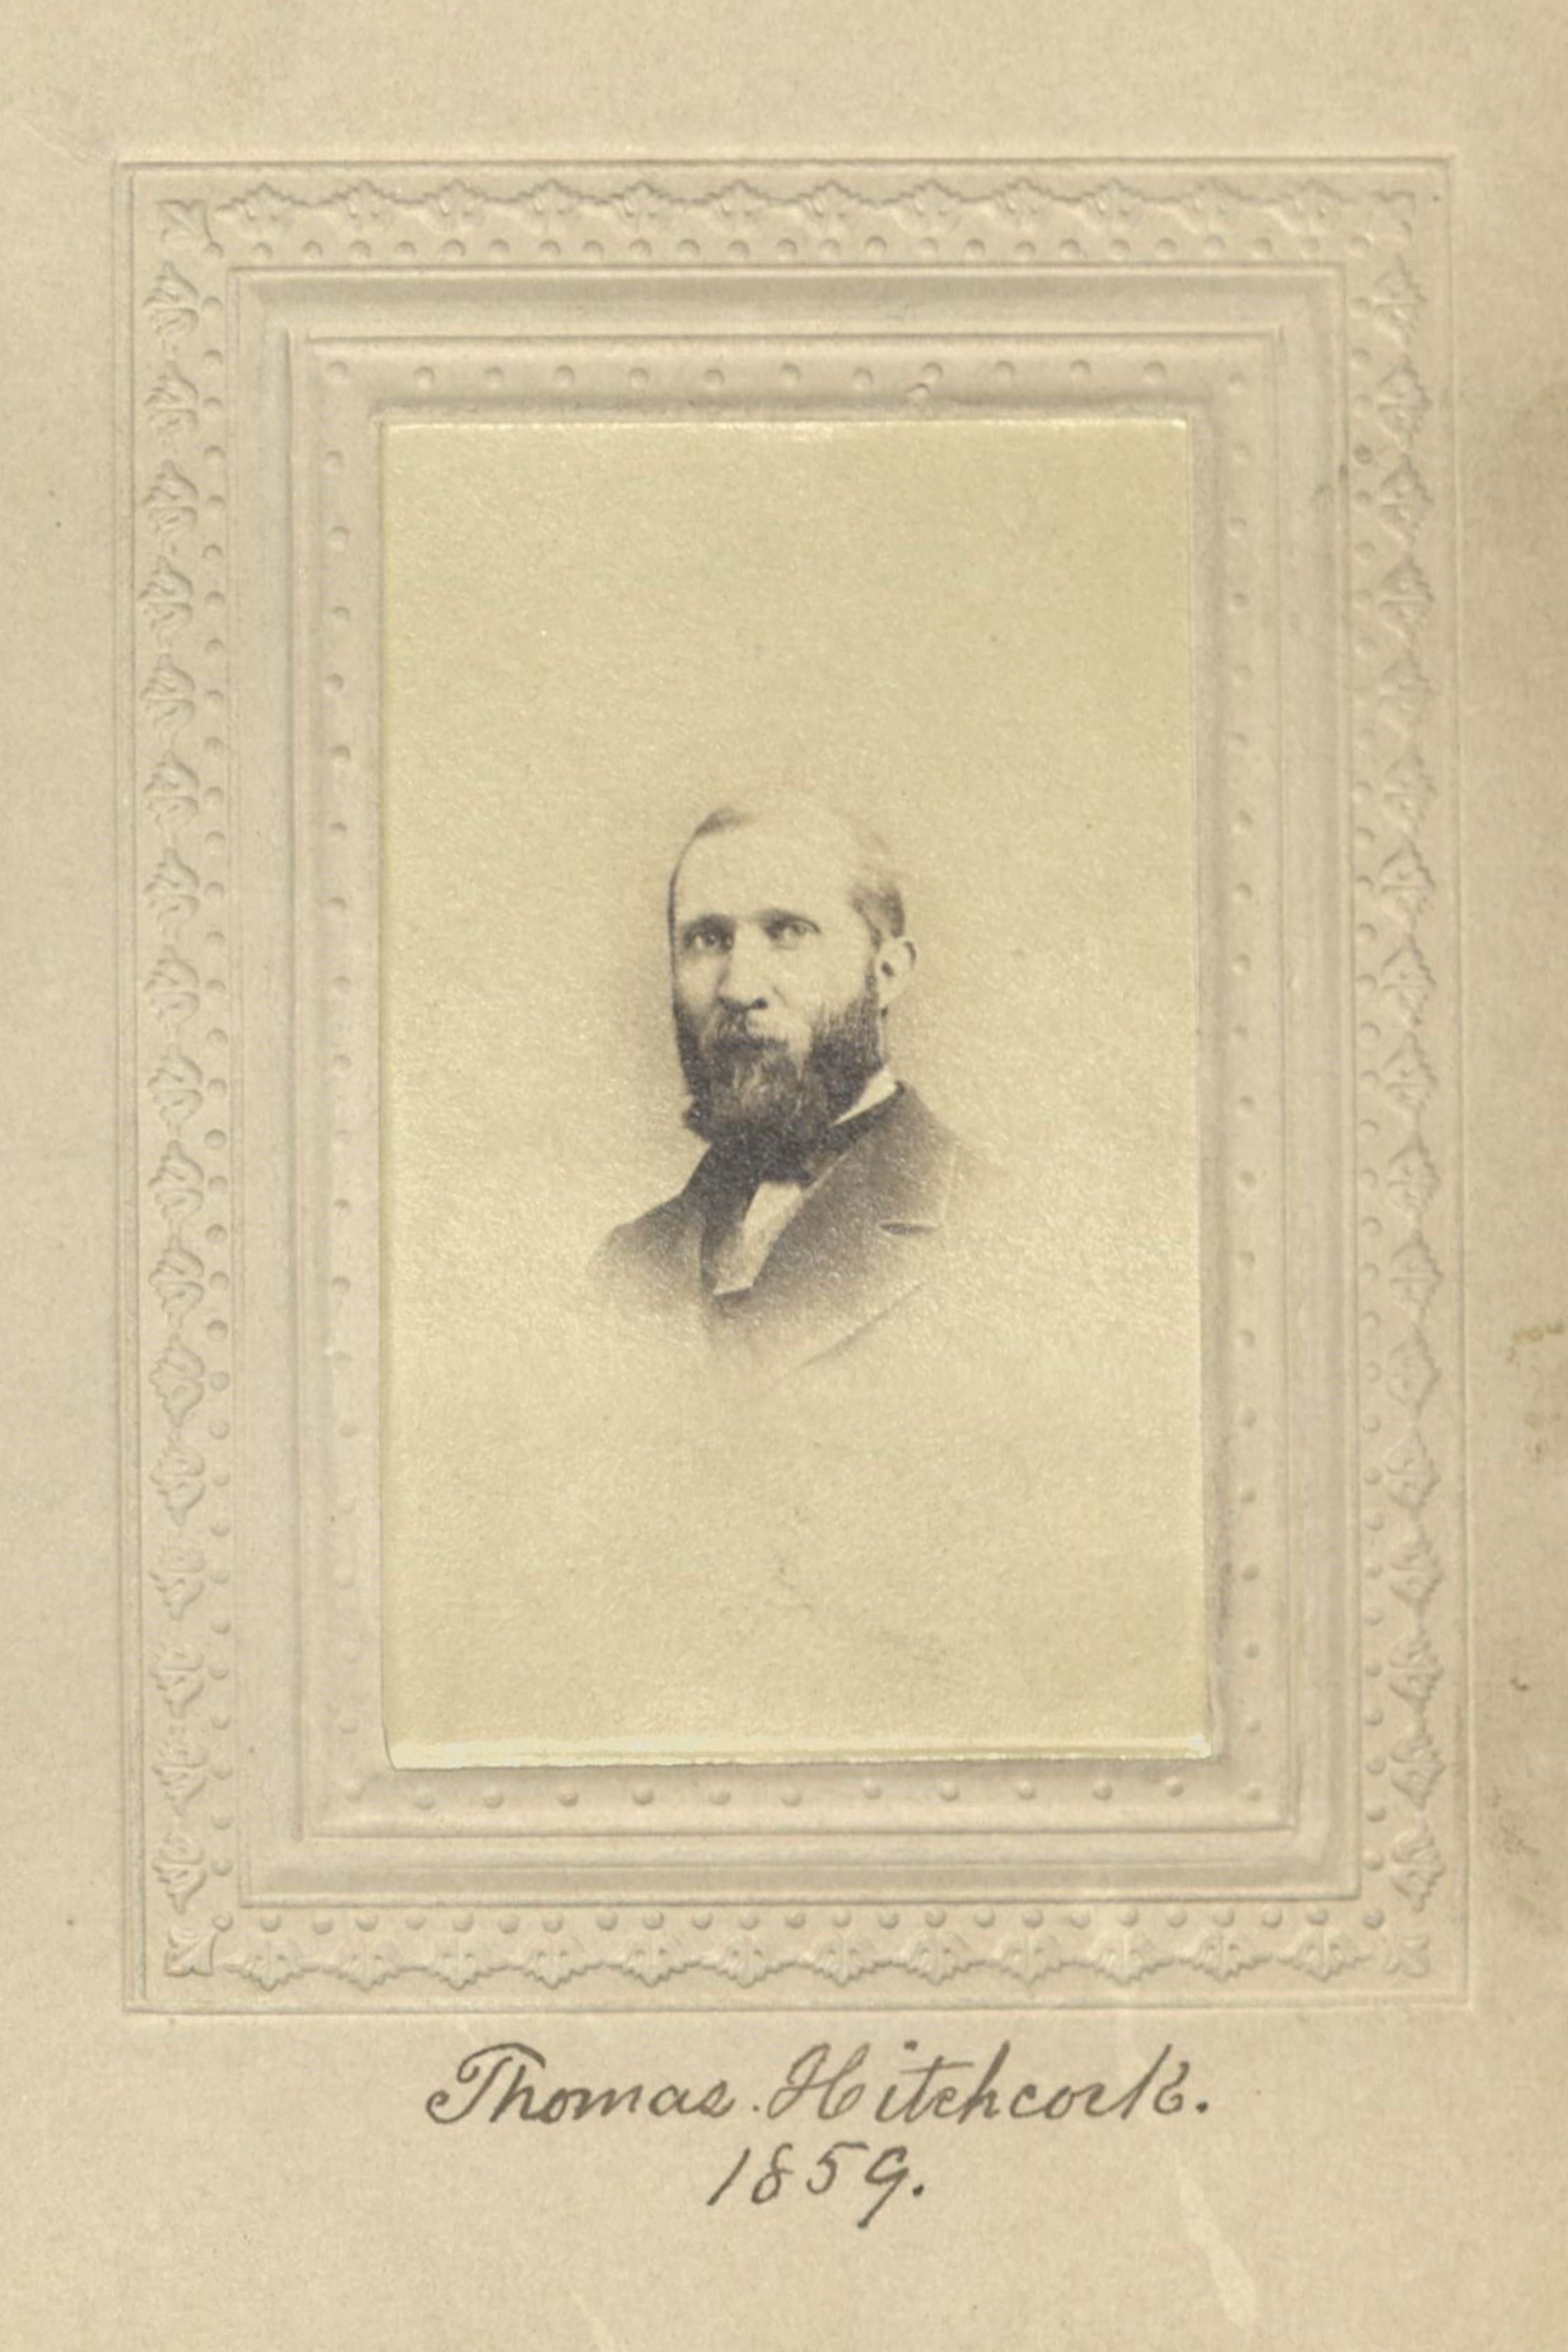 Member portrait of Thomas Hitchcock